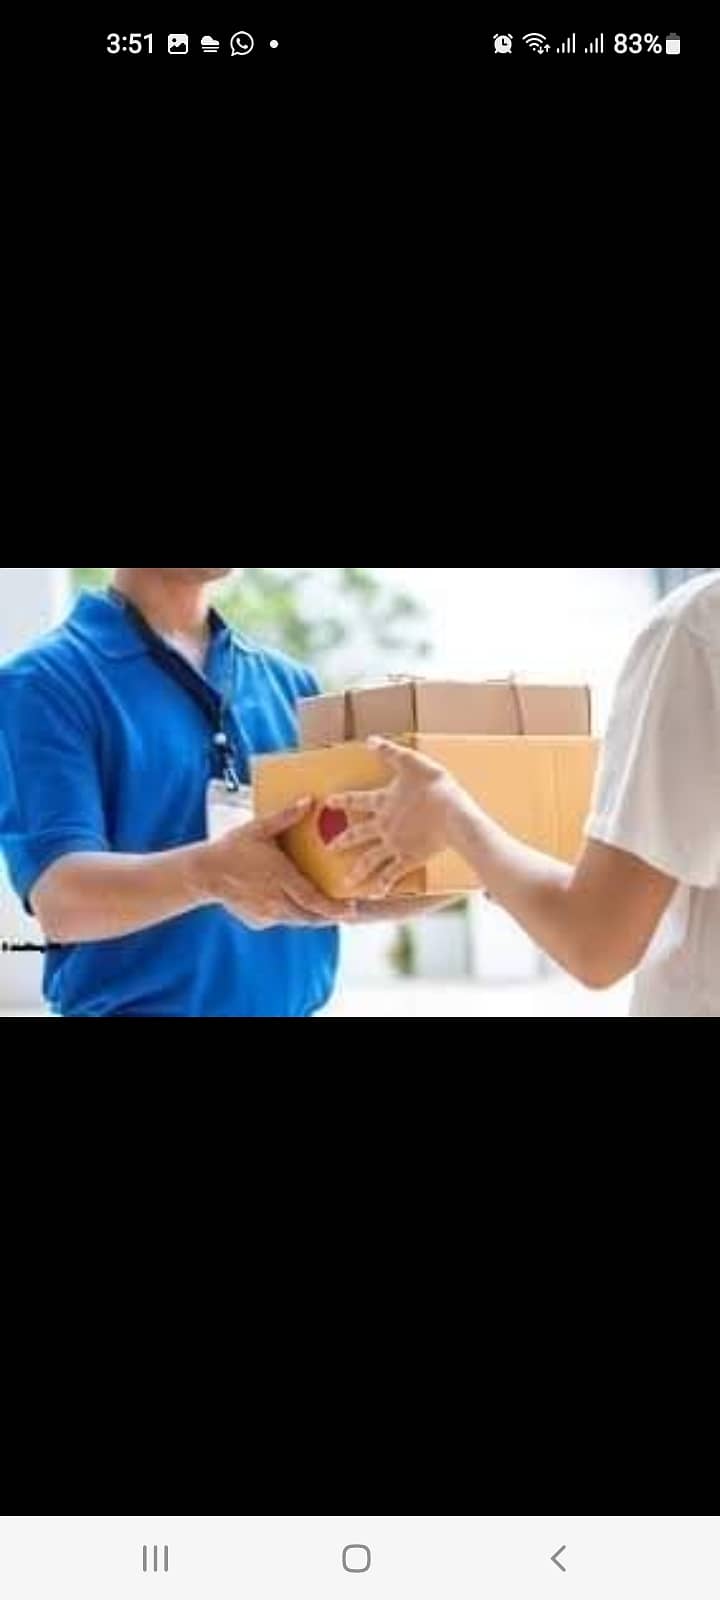 ICE Cargo services send Amazon, Ebay etc. shipments in Warehouses 2